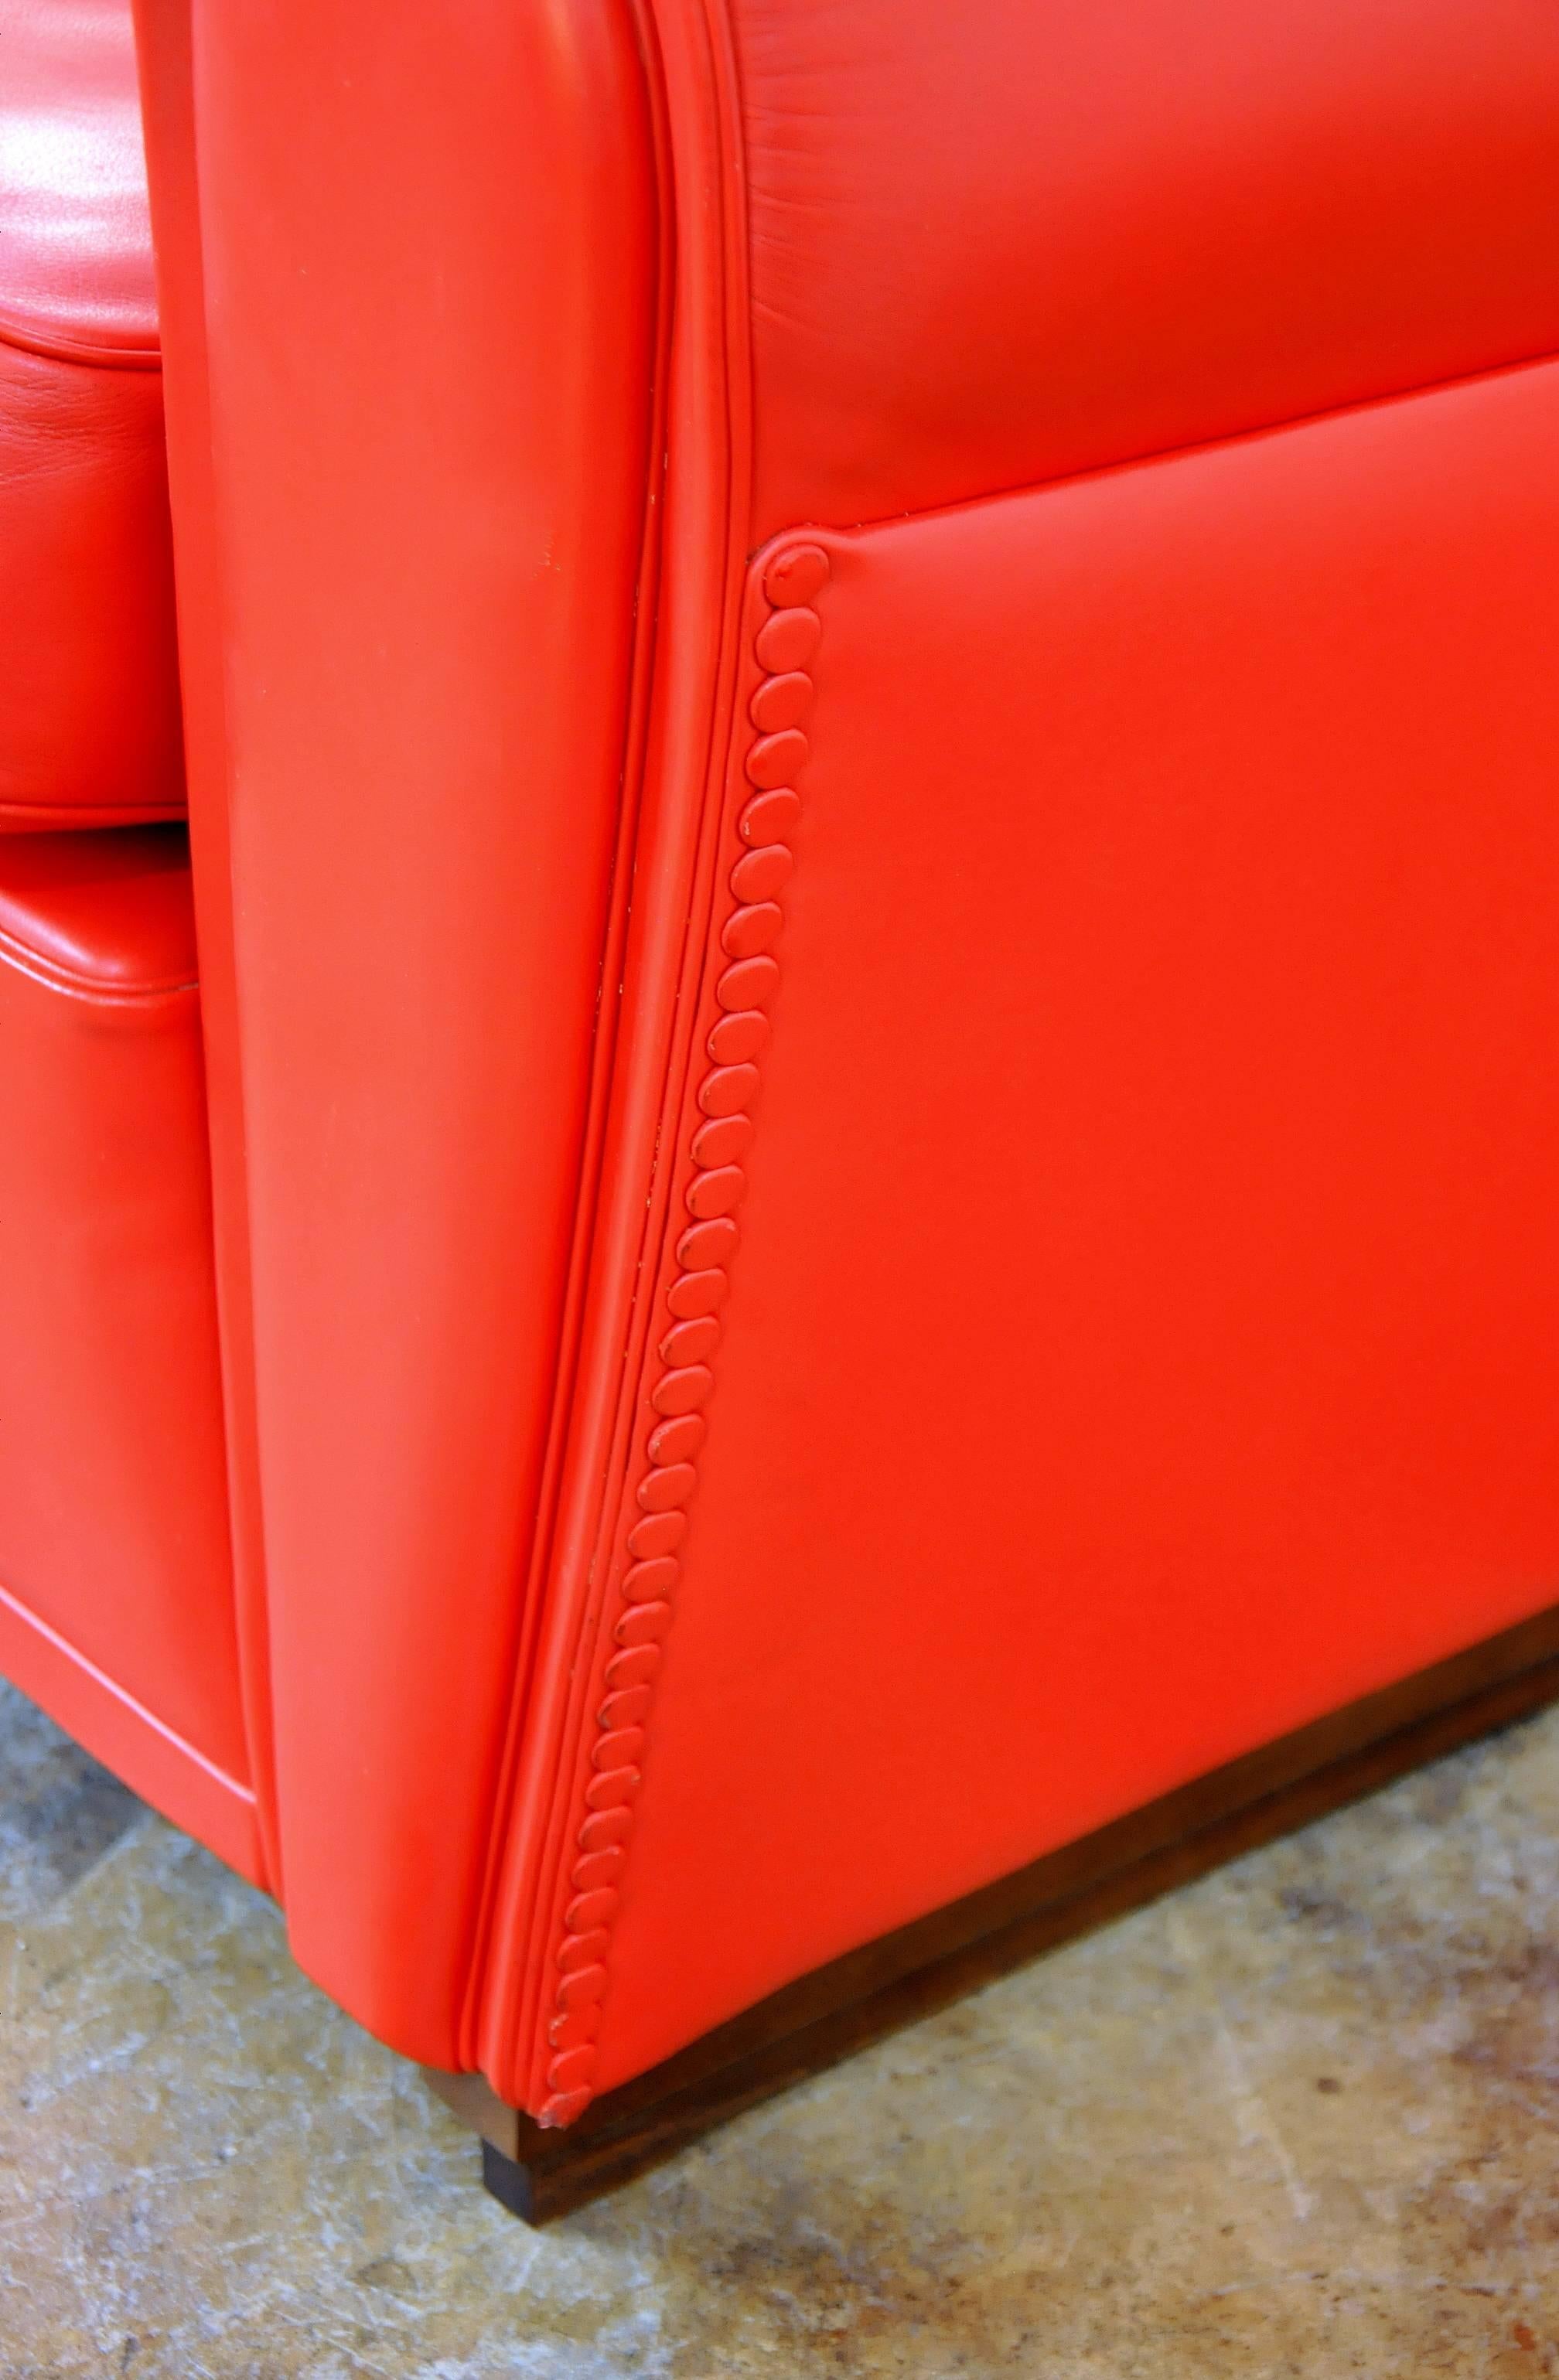 Late 20th Century Poltrona Frau Vanity Fair Red Leather Club Chair